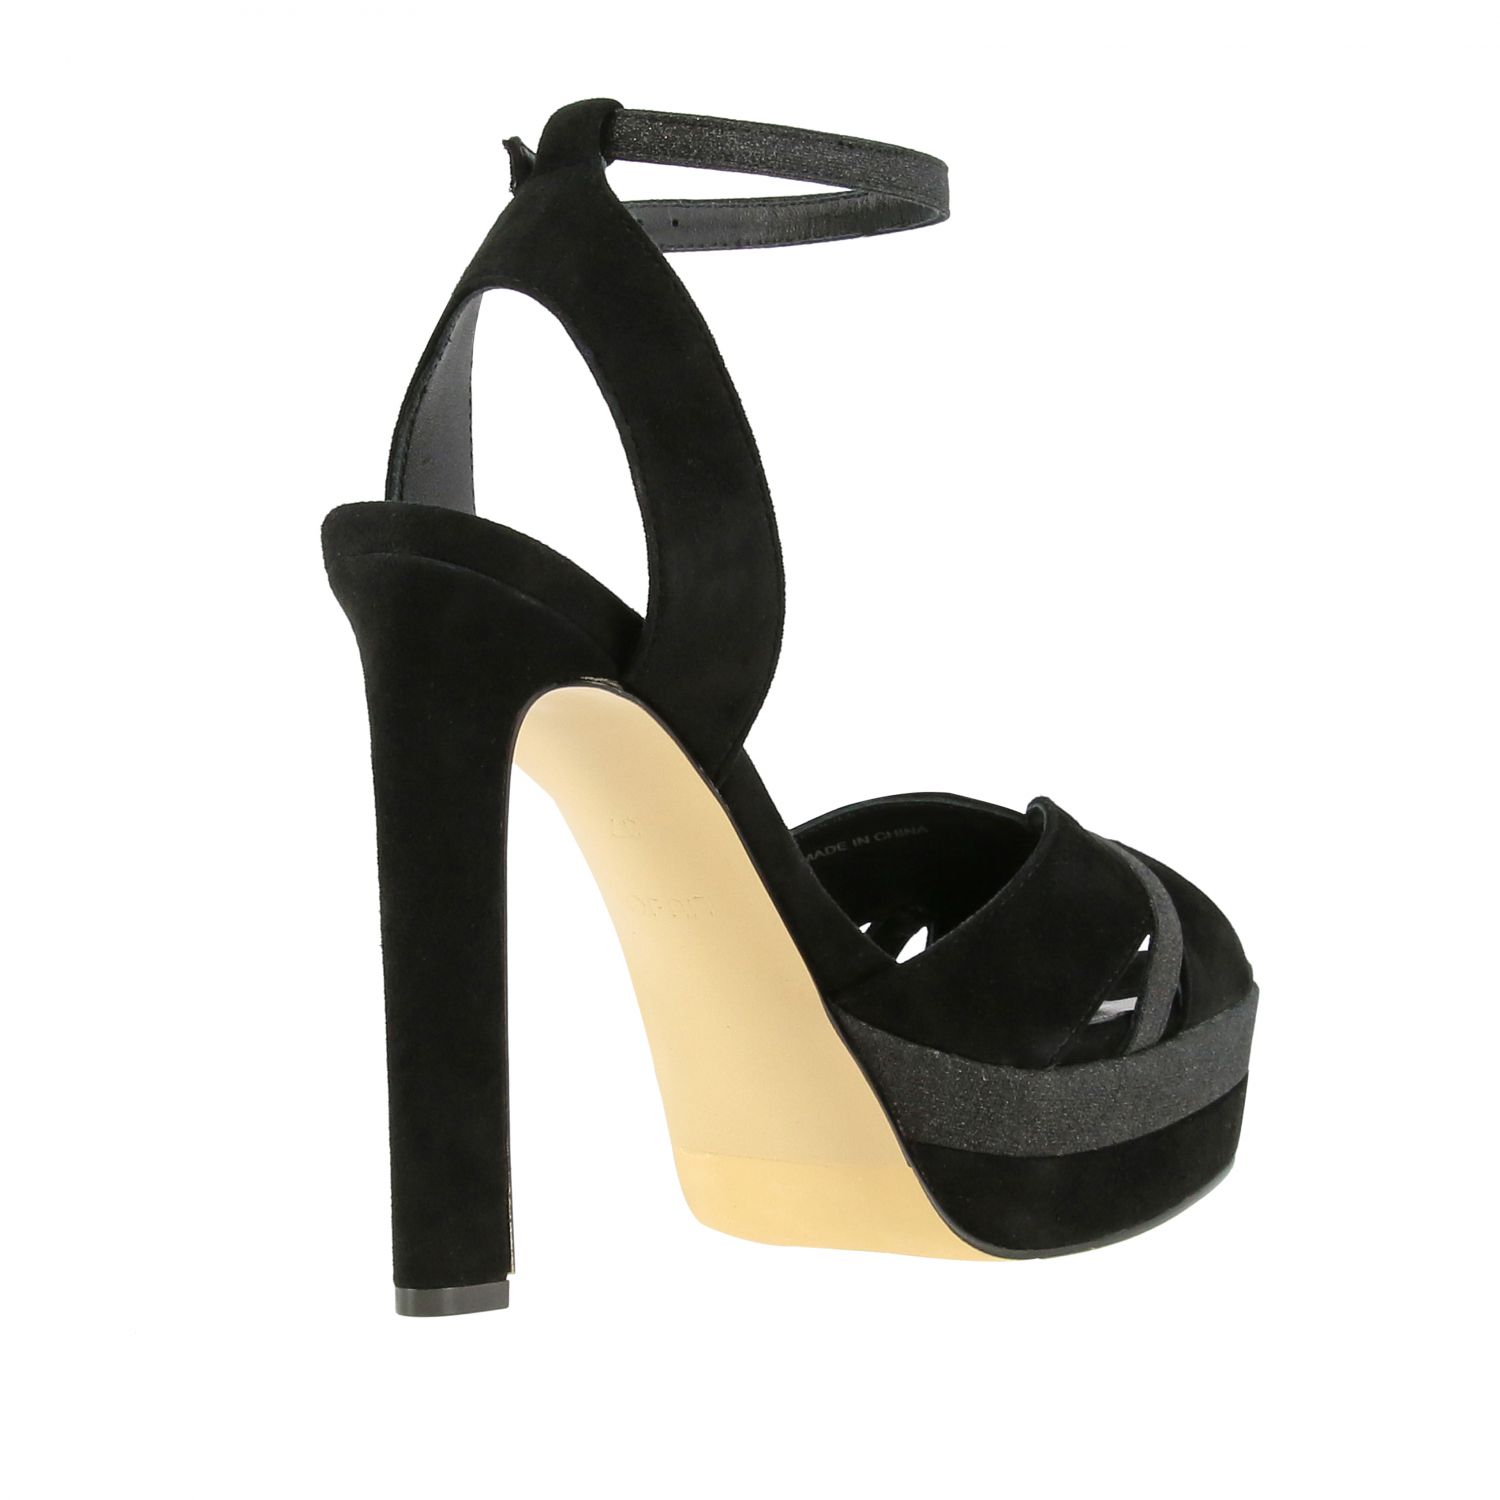 Liu Jo Outlet: high heel shoes for women - Black | Liu Jo high heel ...